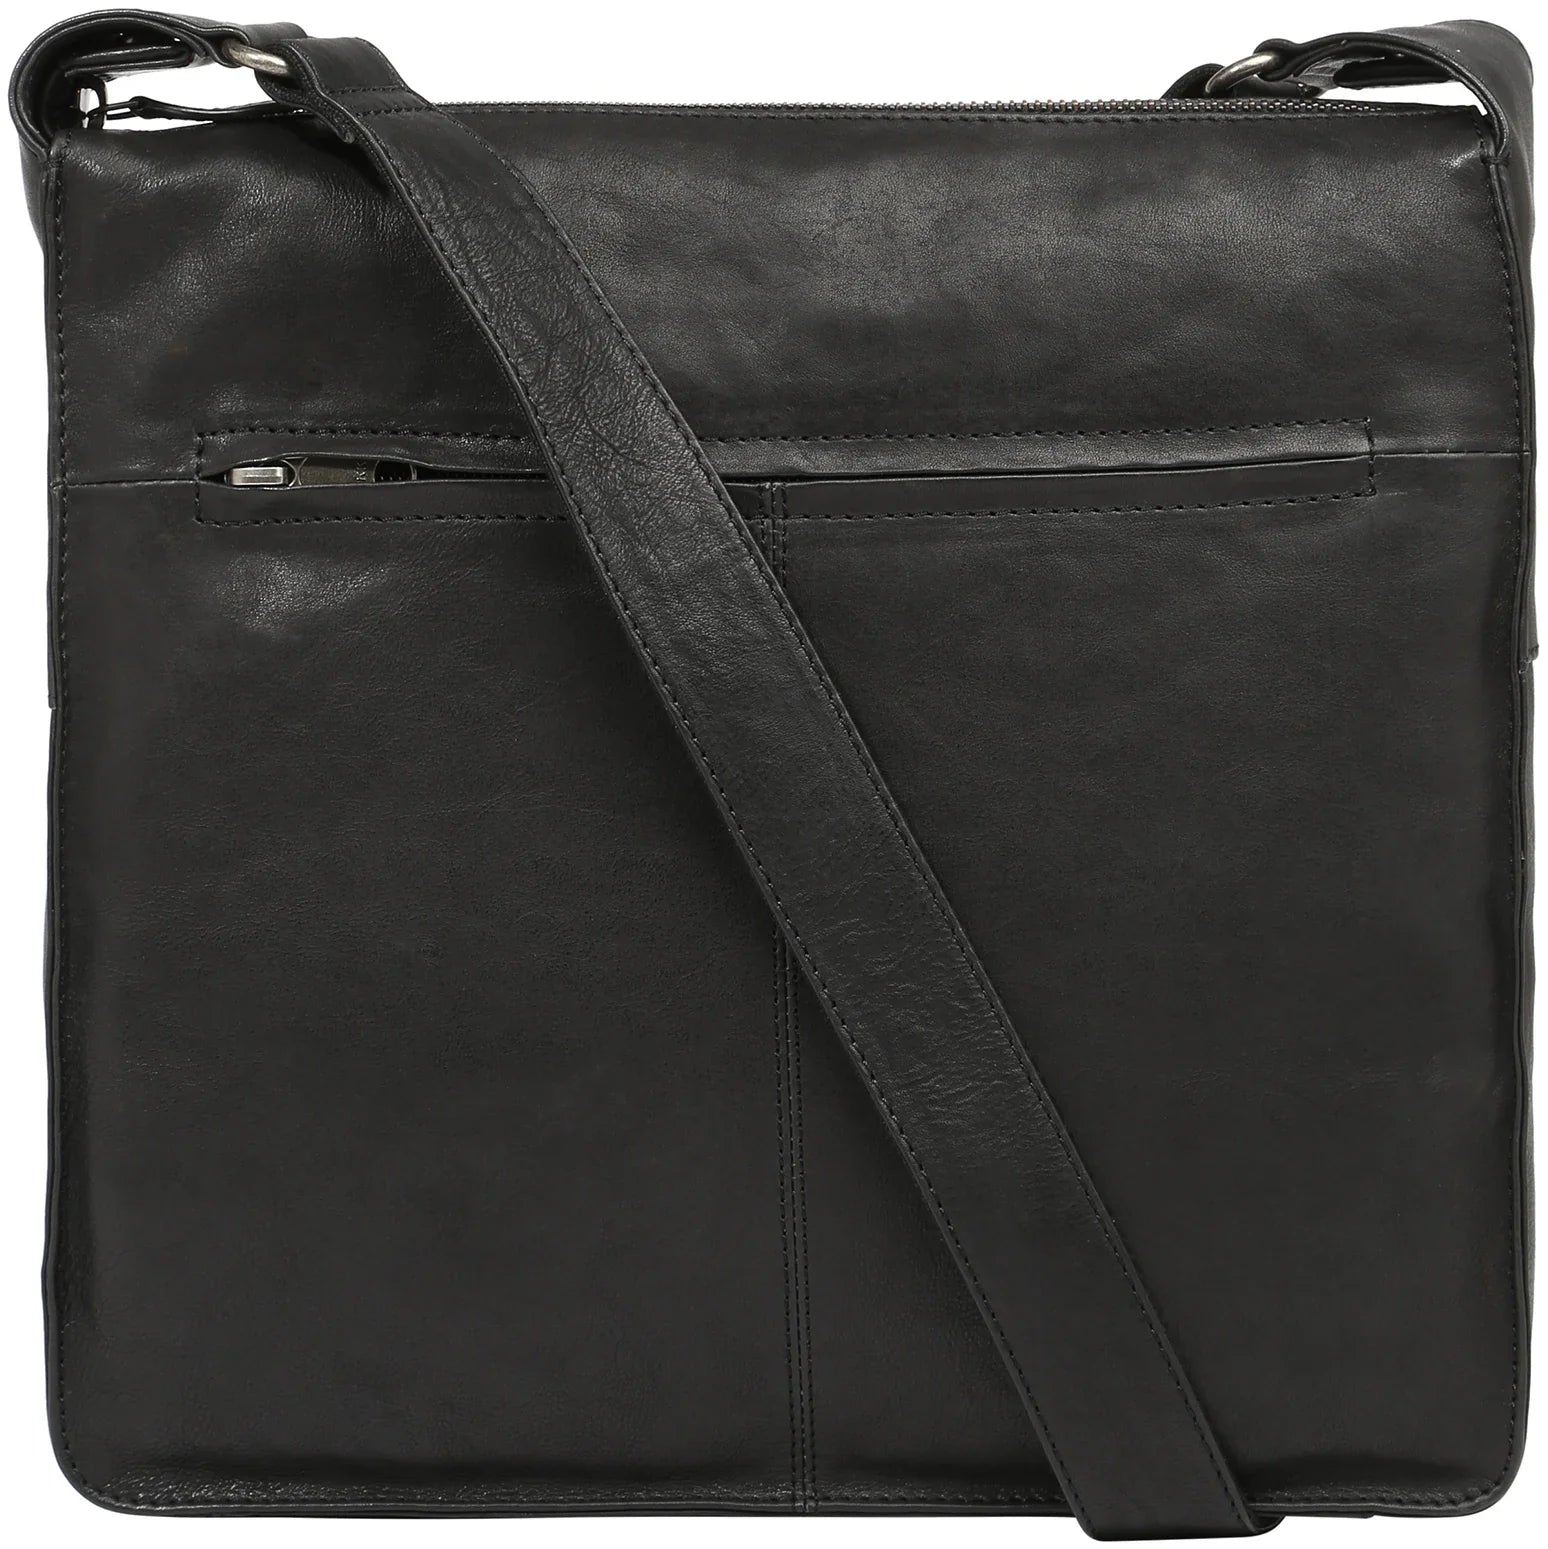 VOi-Design Dakota Lola shoulder bag 29 cm - Black